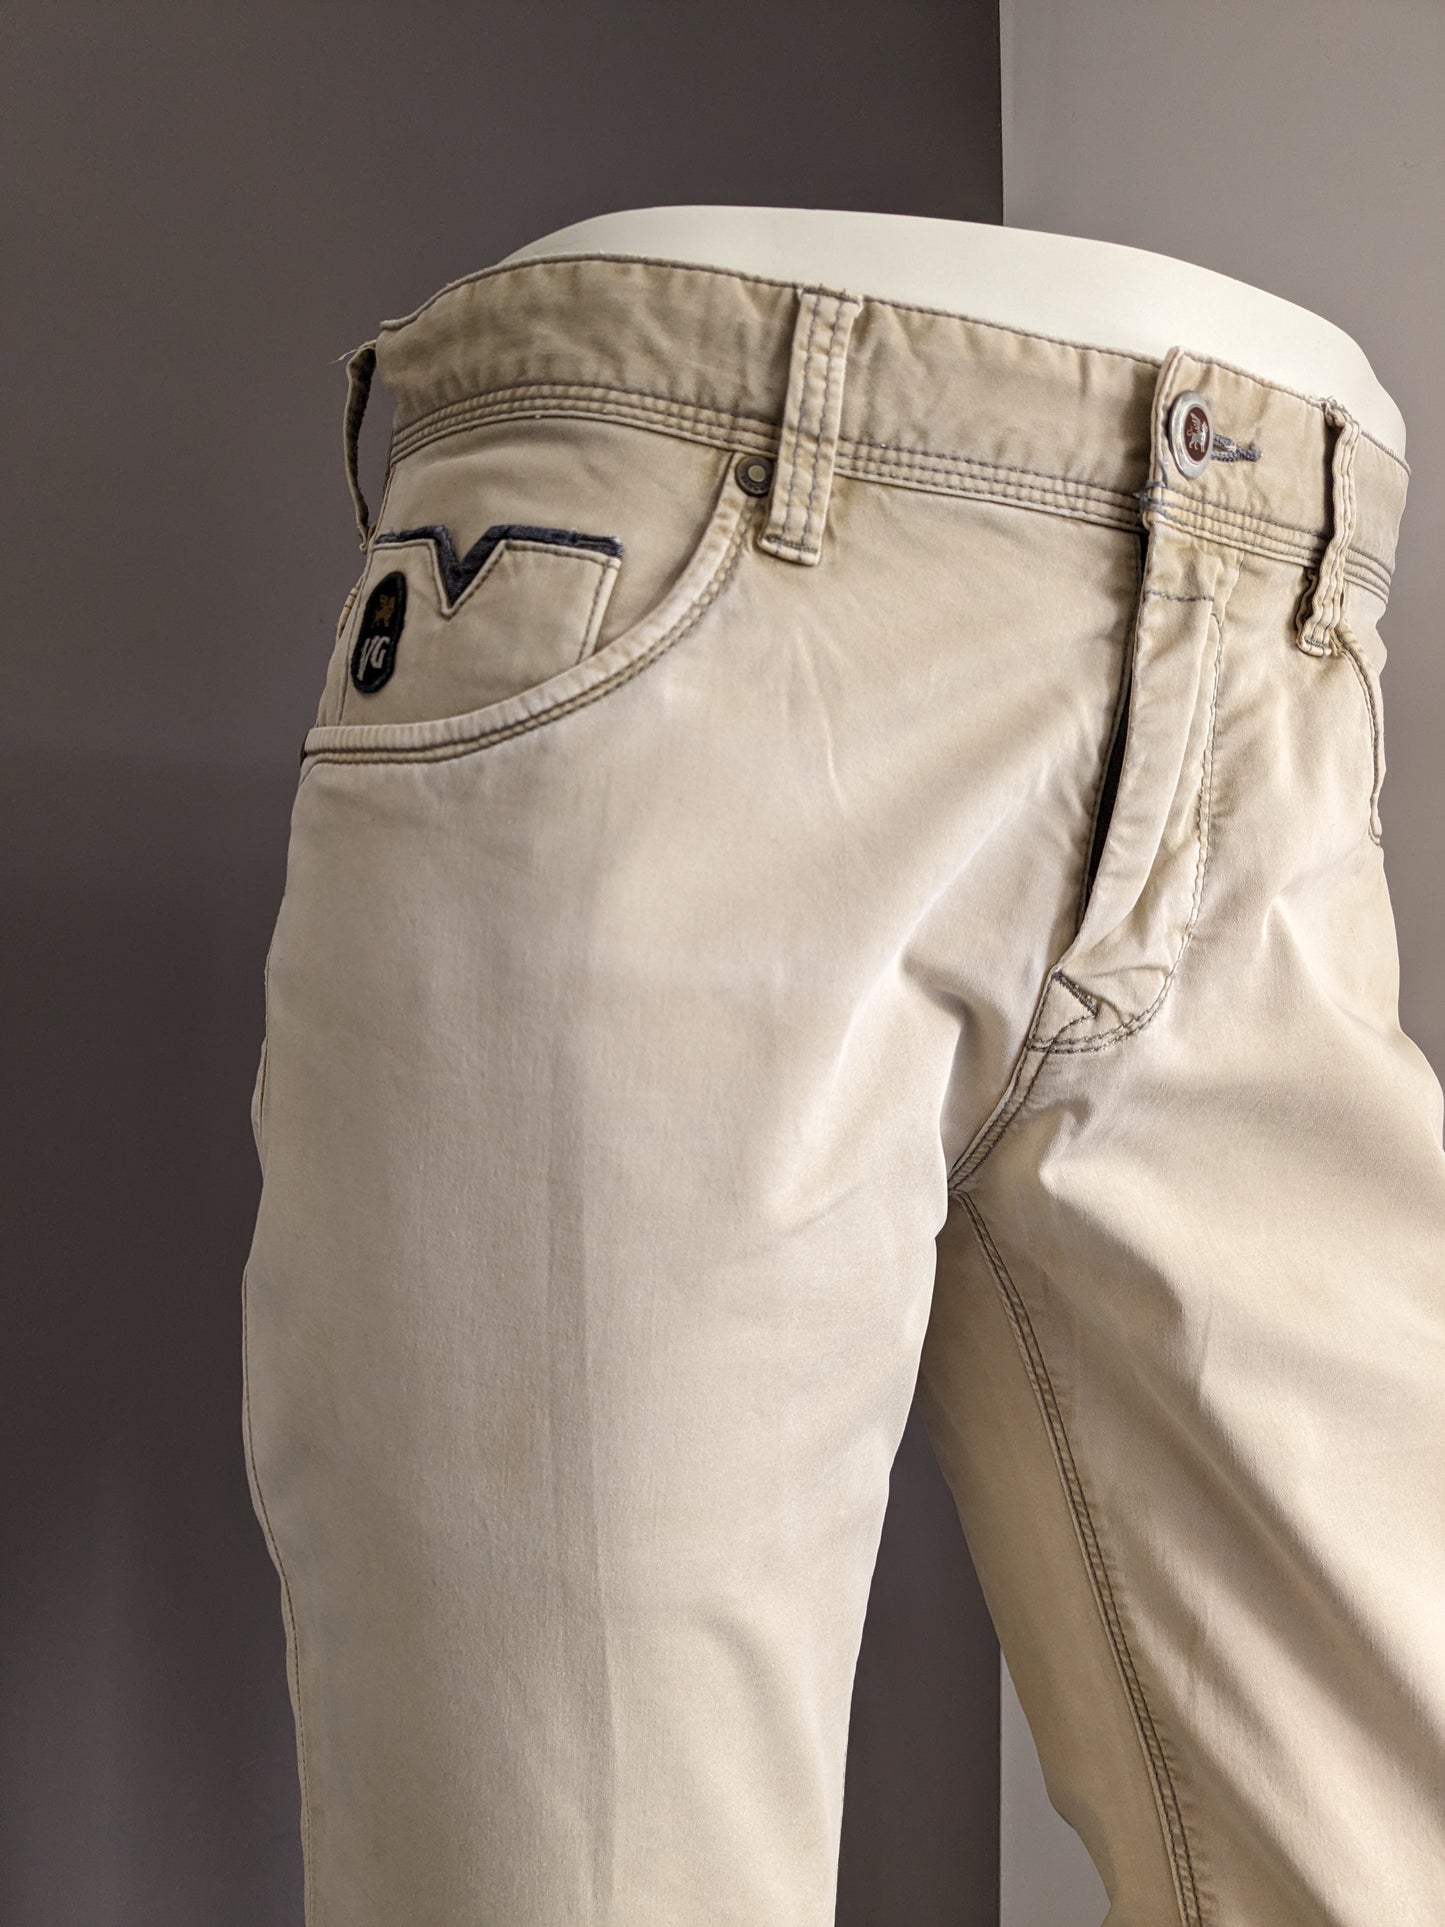 Vanguard pants. Beige colored. Size W31 - L32.